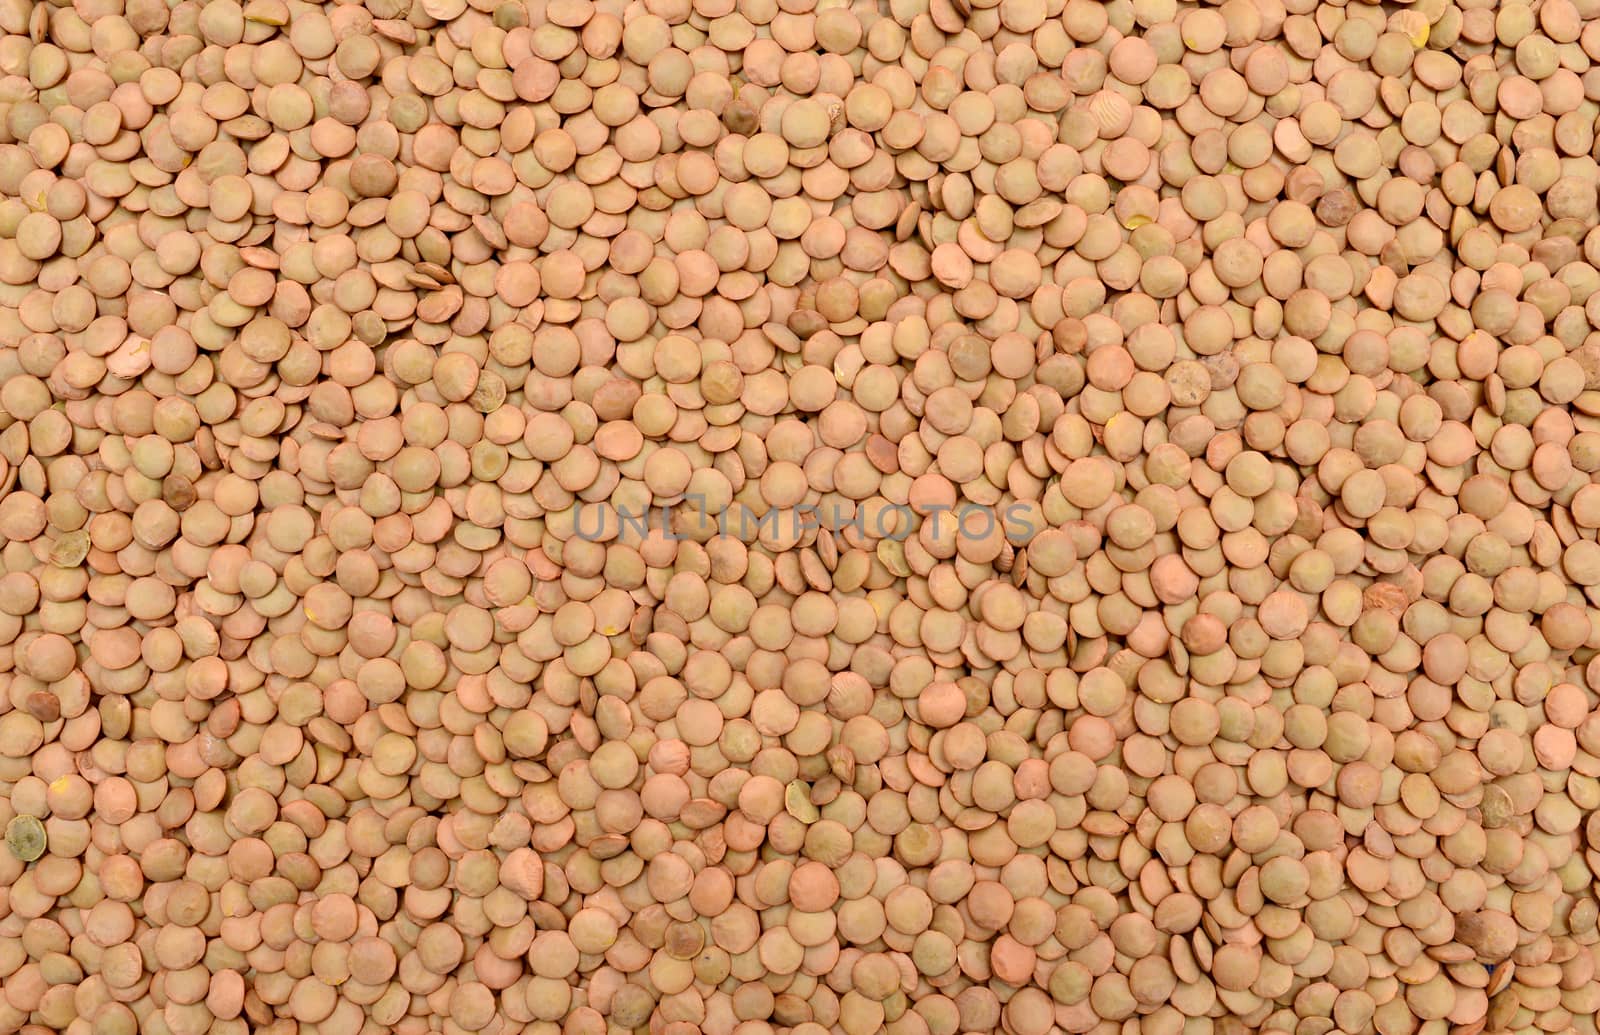 lentil seeds texture by tony4urban